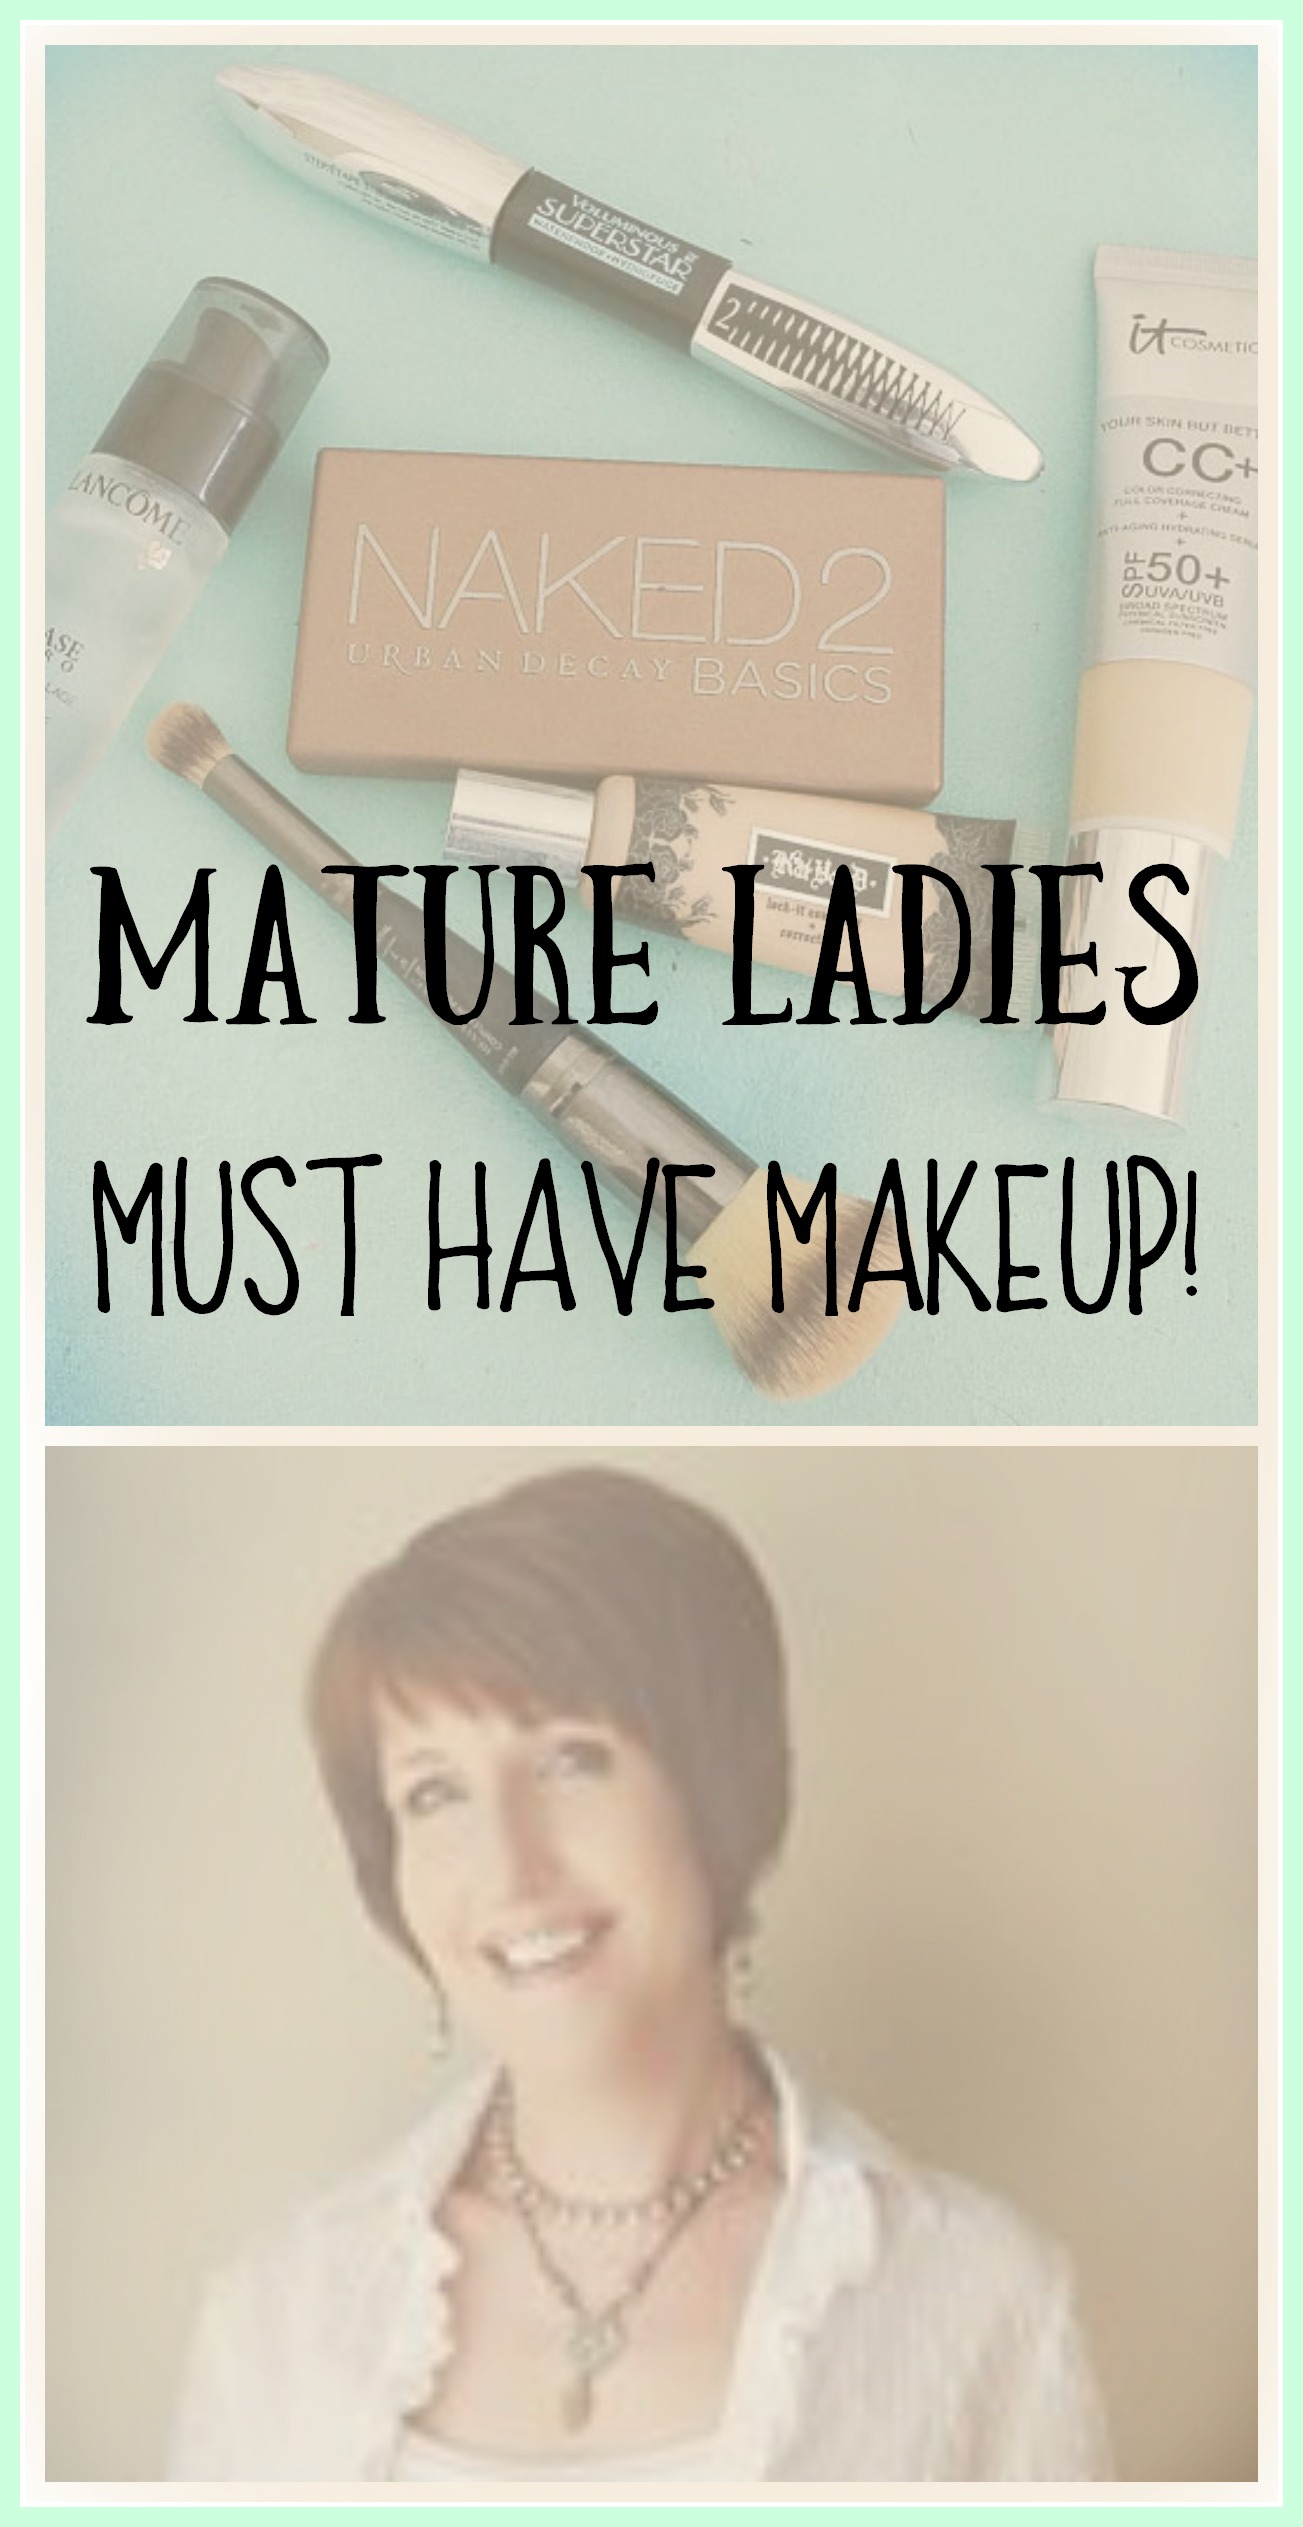 https://whitelacecottage.com/wp-content/uploads/2016/06/Mature-ladies-must-have-makeup.jpg